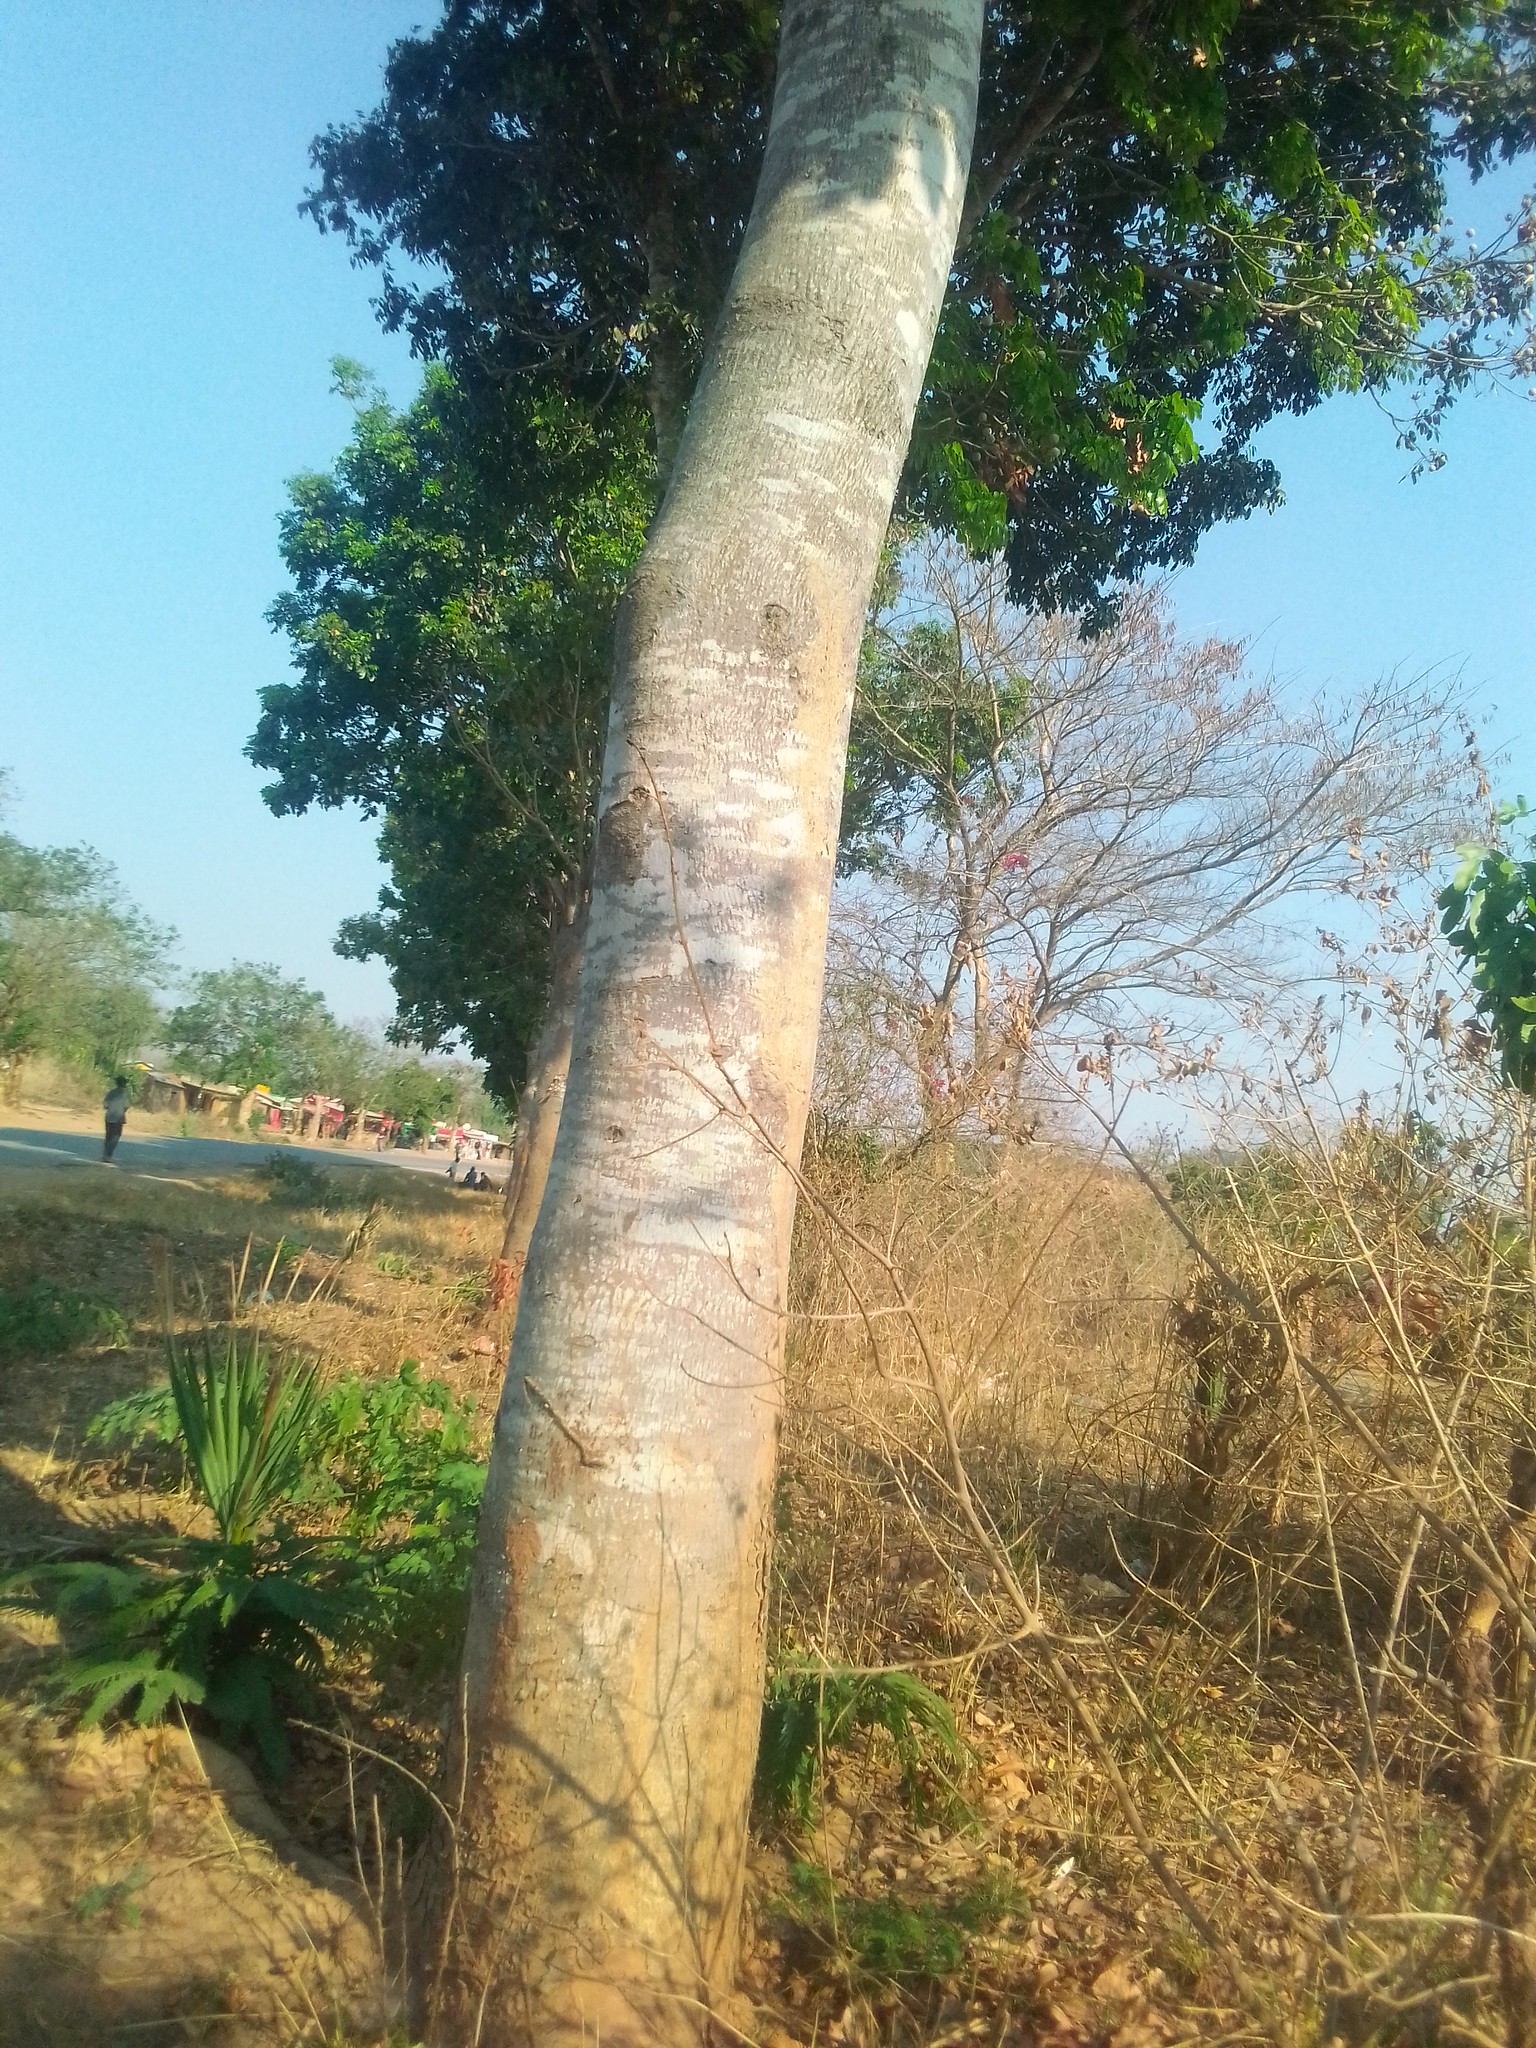 M'bawa ((Khaya Nyasica) tree in Chitipa